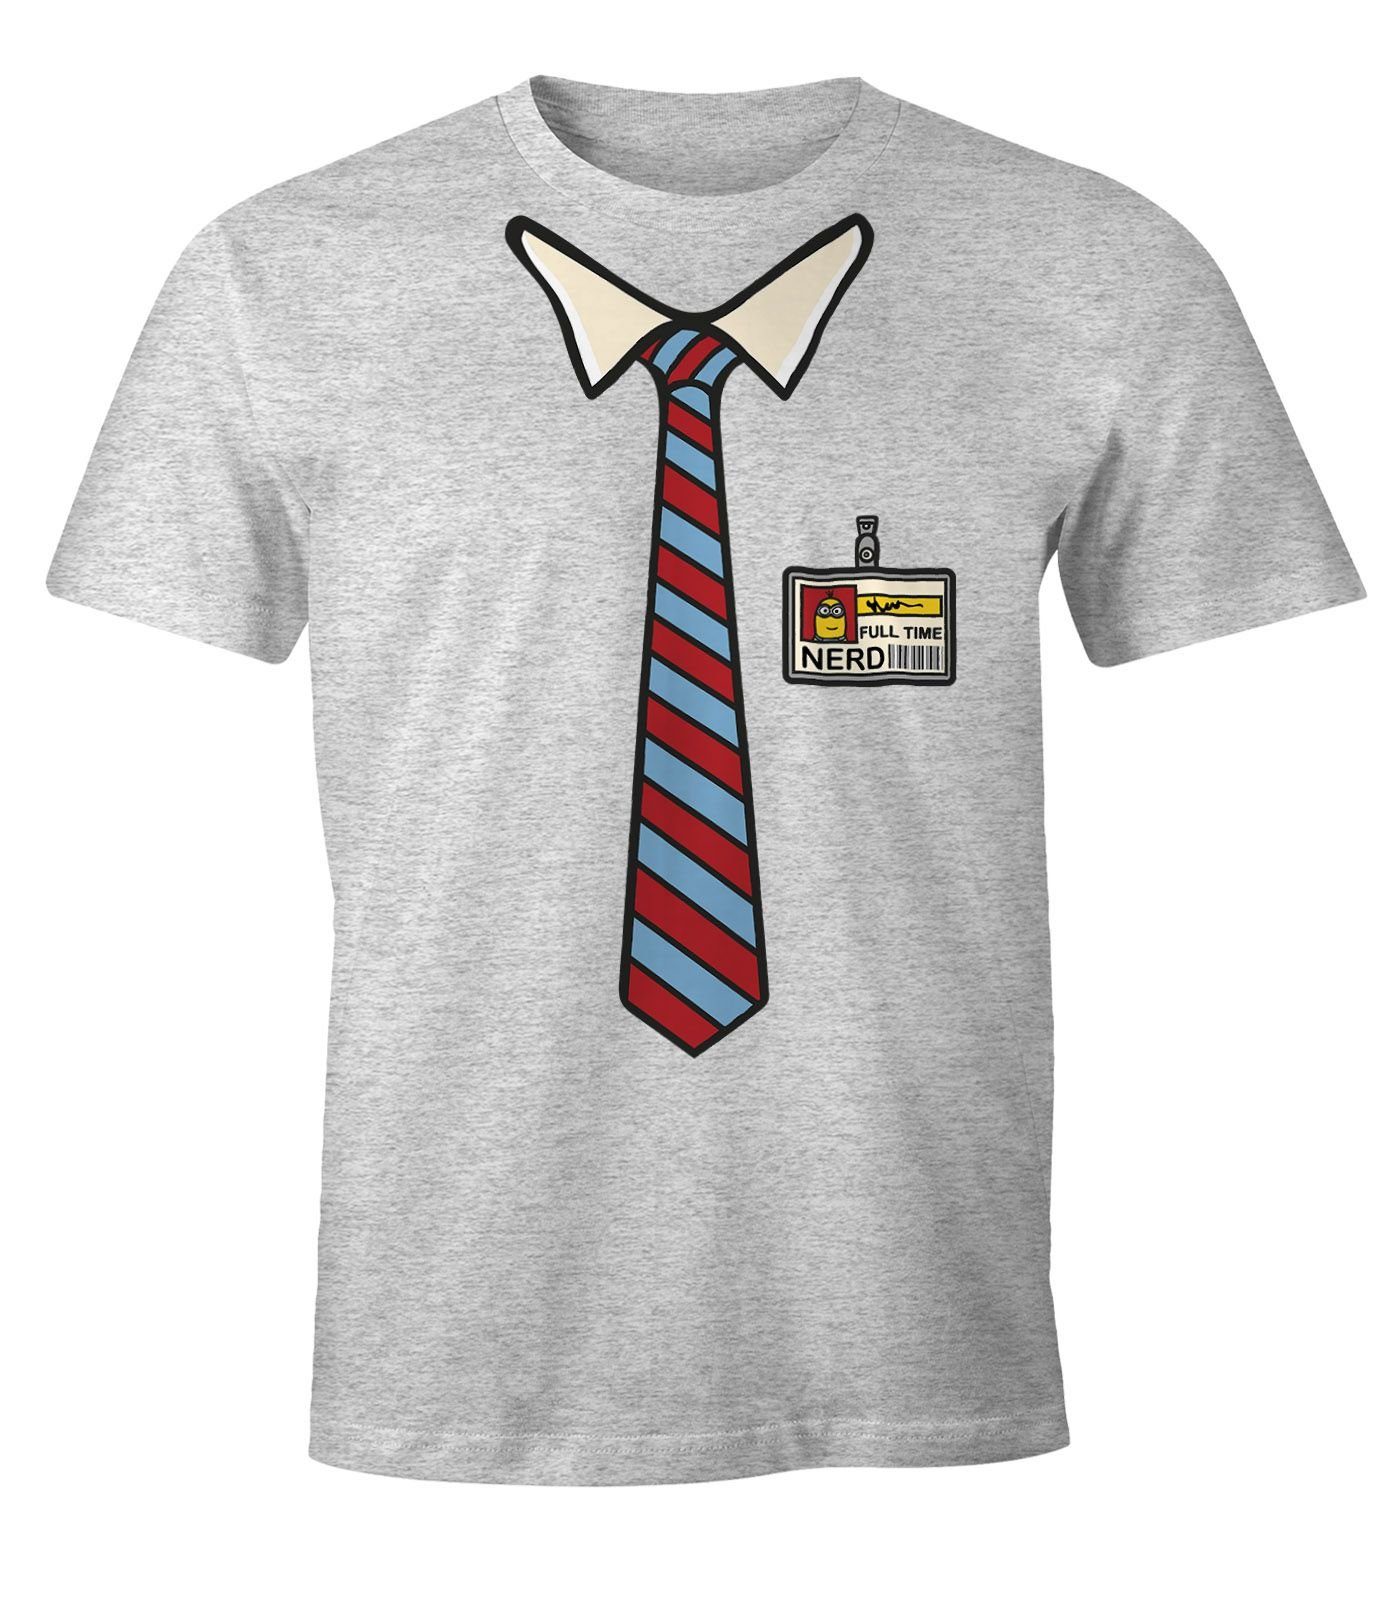 MoonWorks Print-Shirt Herren Print mit Time Fun-Shirt Moonworks® T-Shirt Full grau Geek Nerd